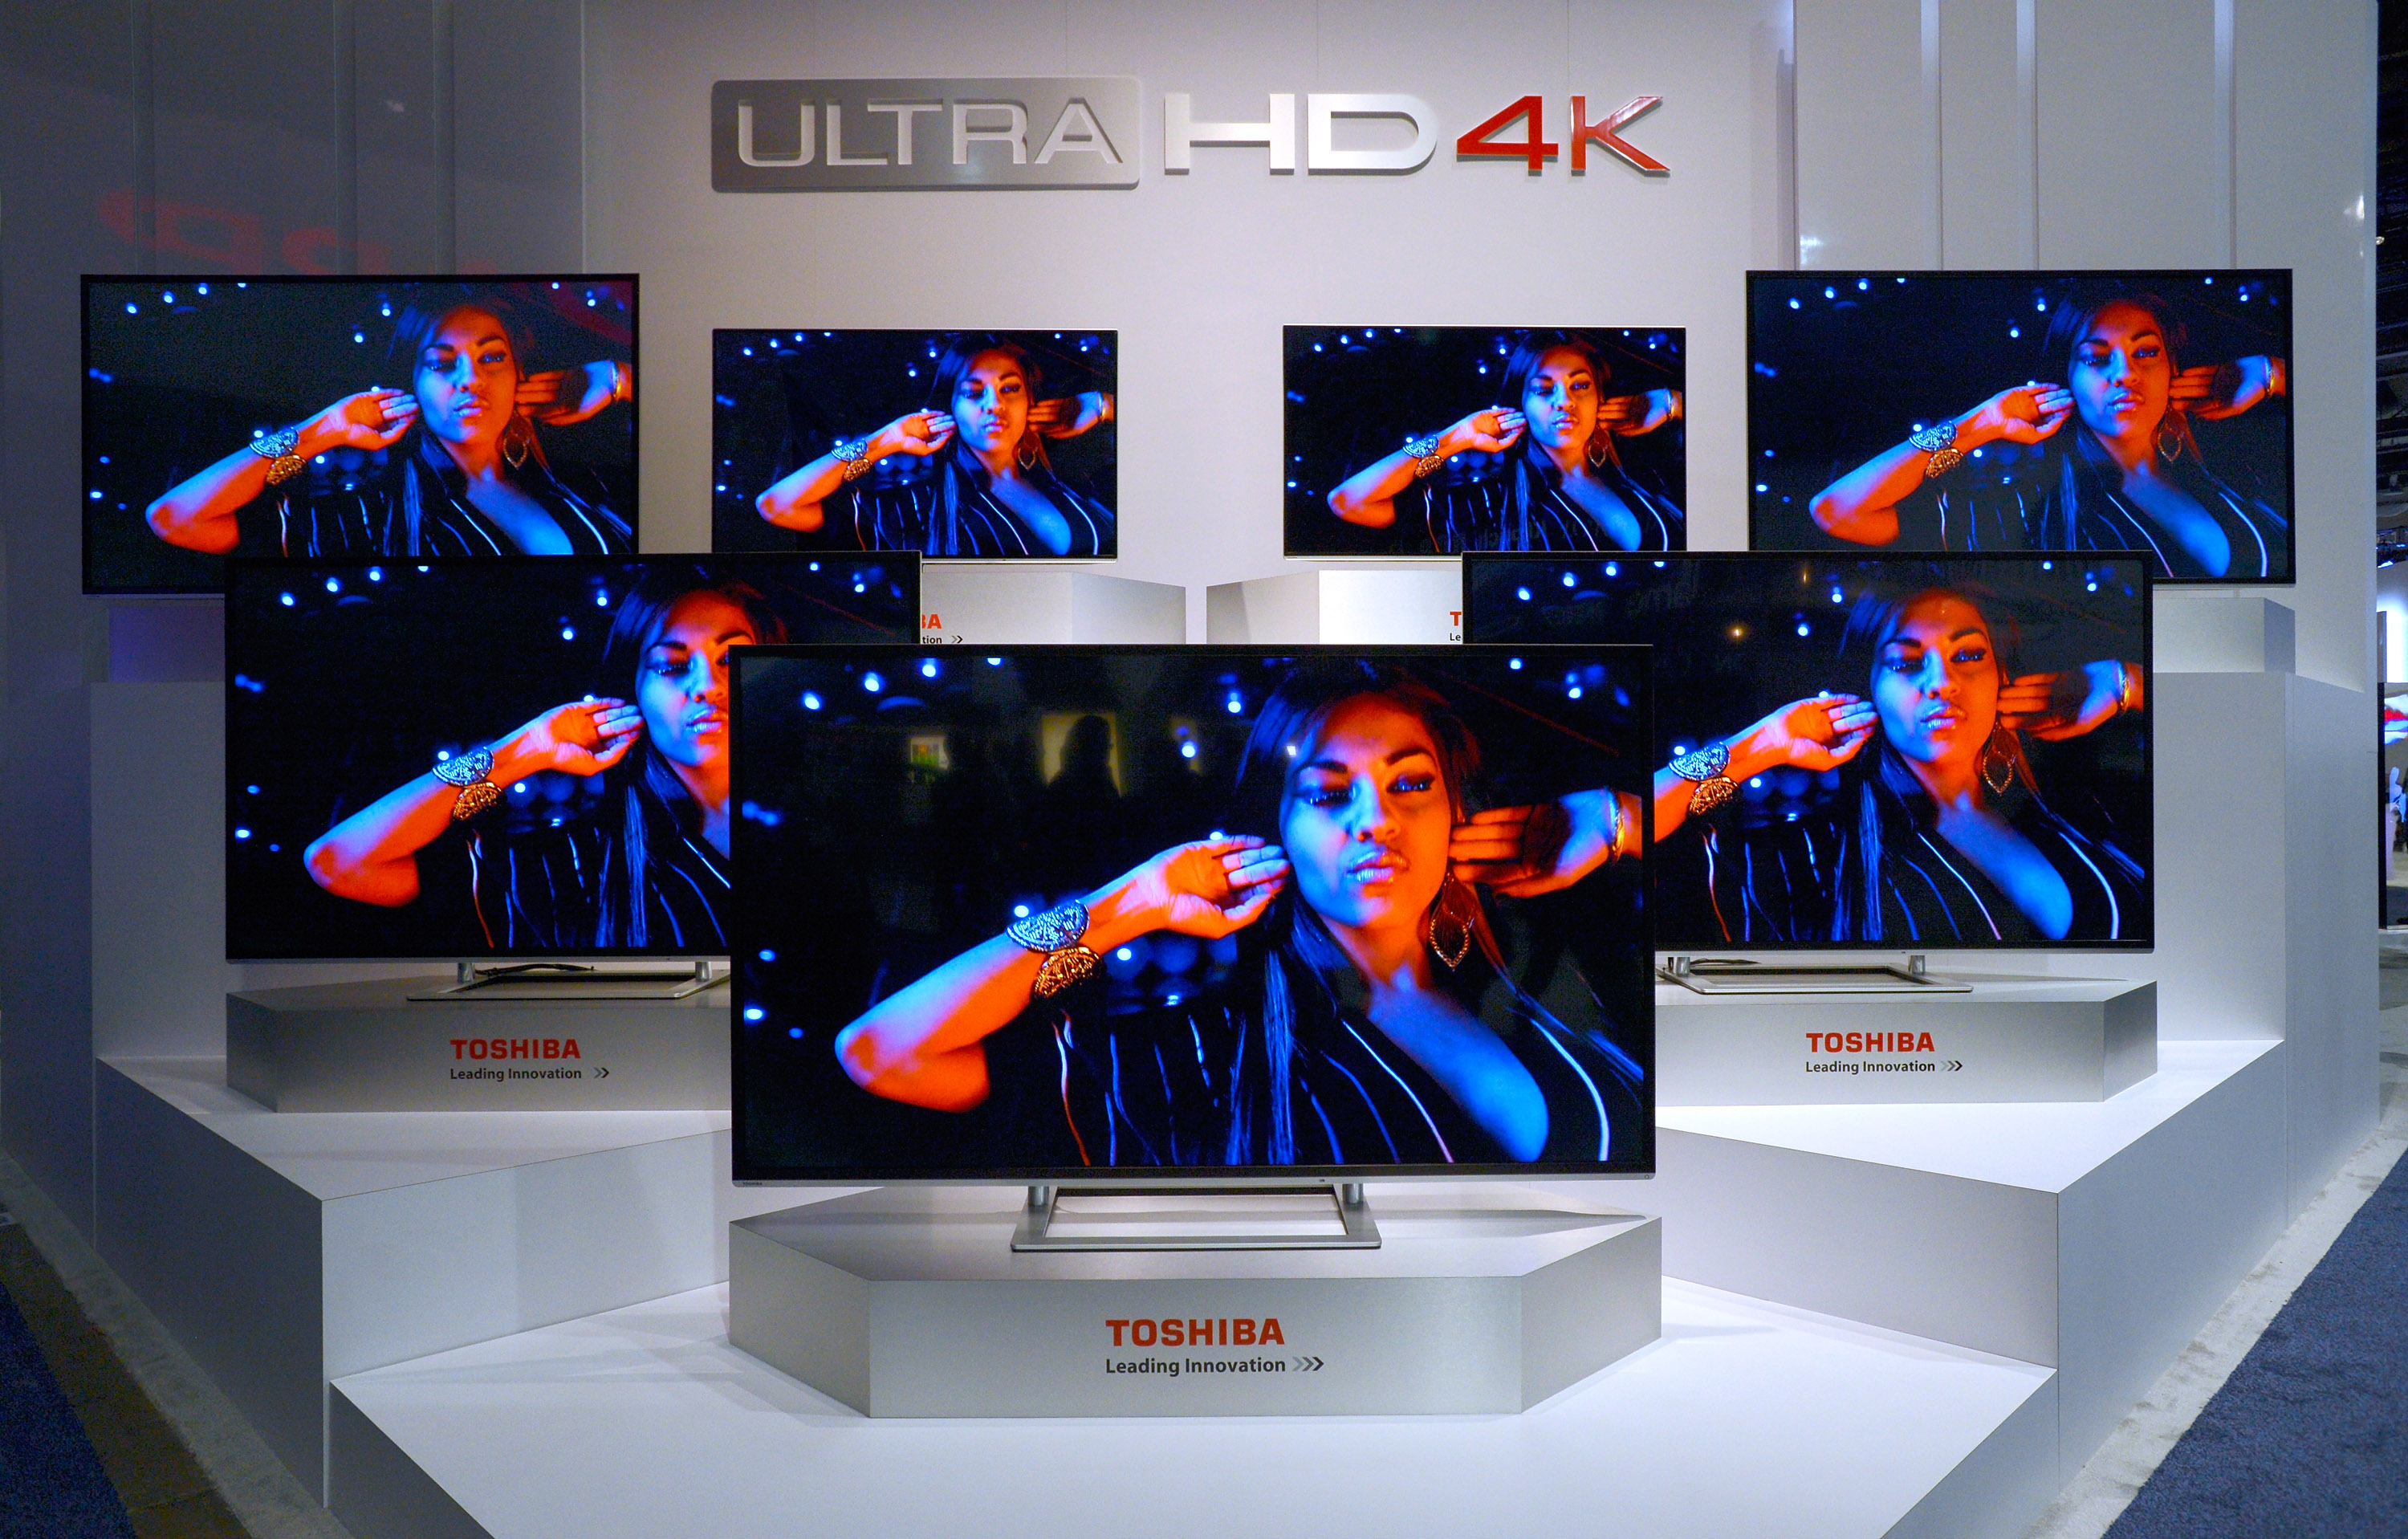 Toshiba Ultra HD 4K display